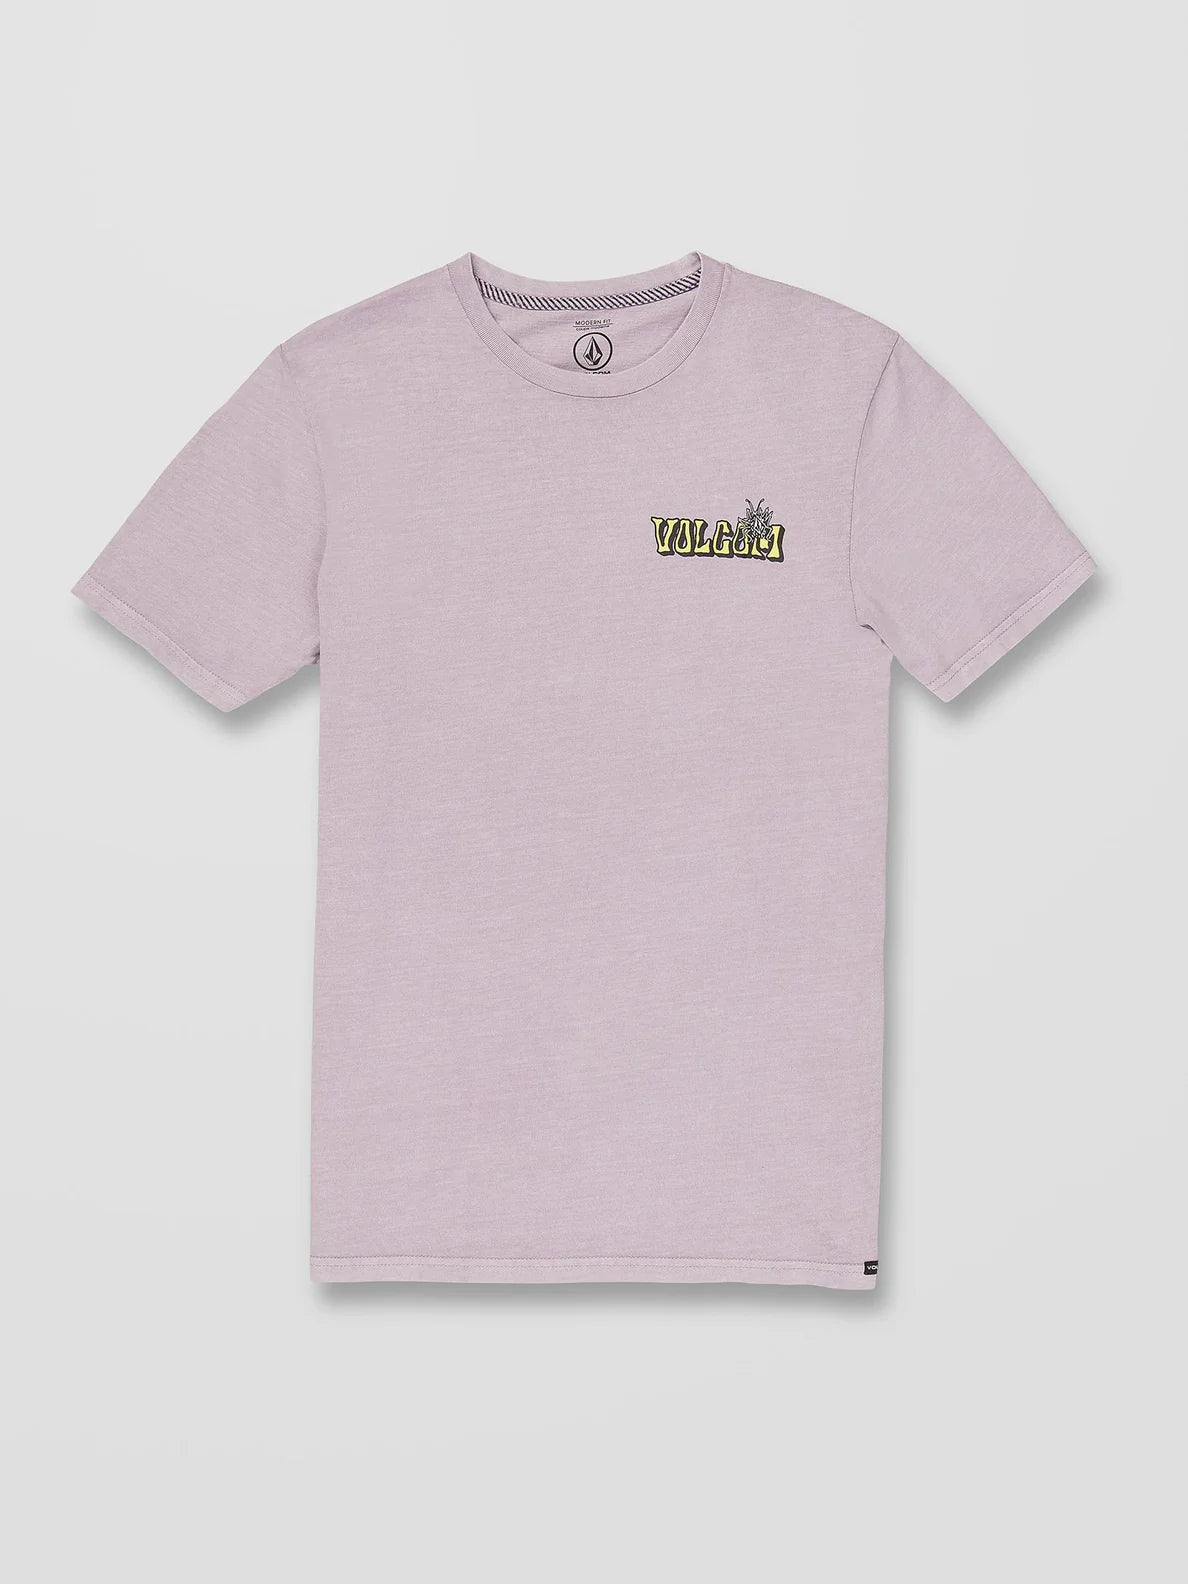 Camiseta Volcom Widgets Nirvana